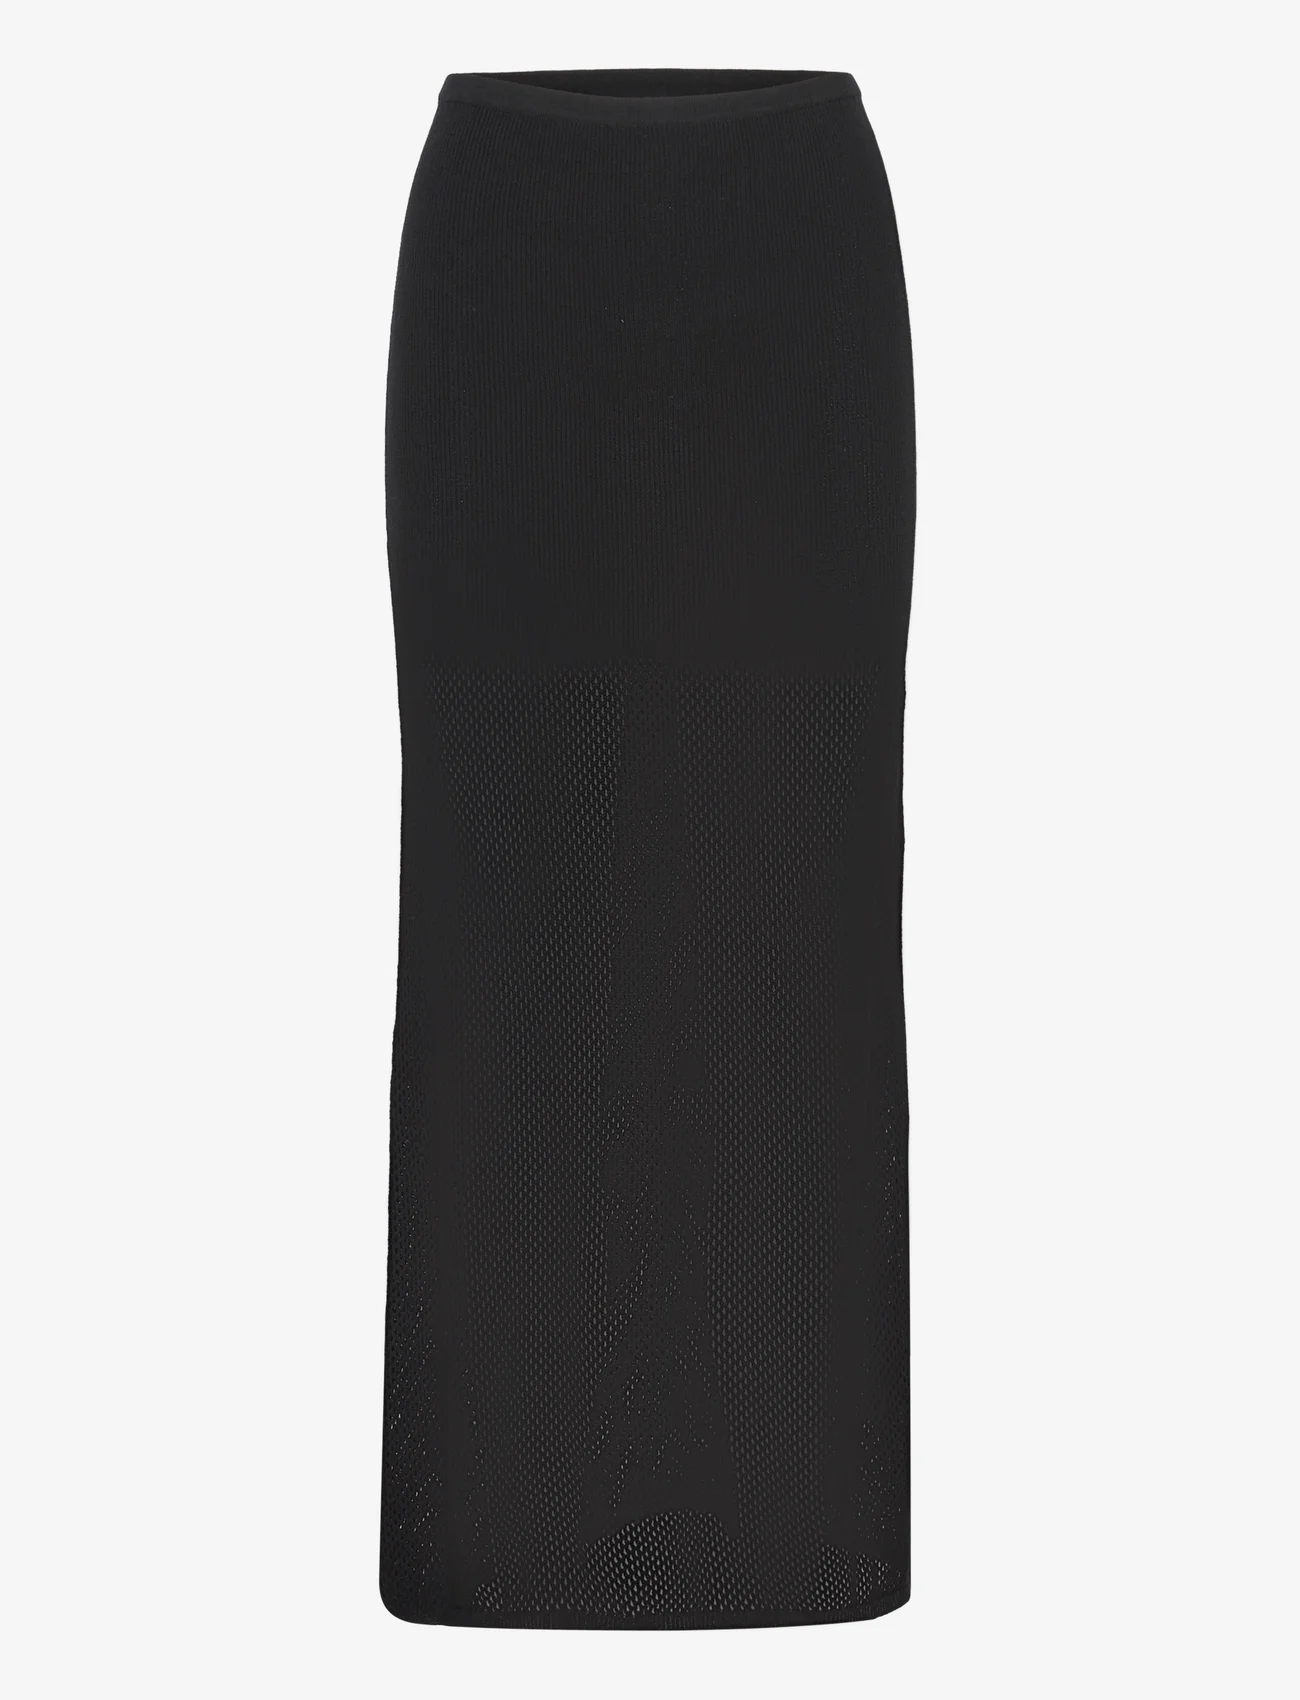 My Essential Wardrobe - AvaMW Knit Skirt - lange rokken - black - 0